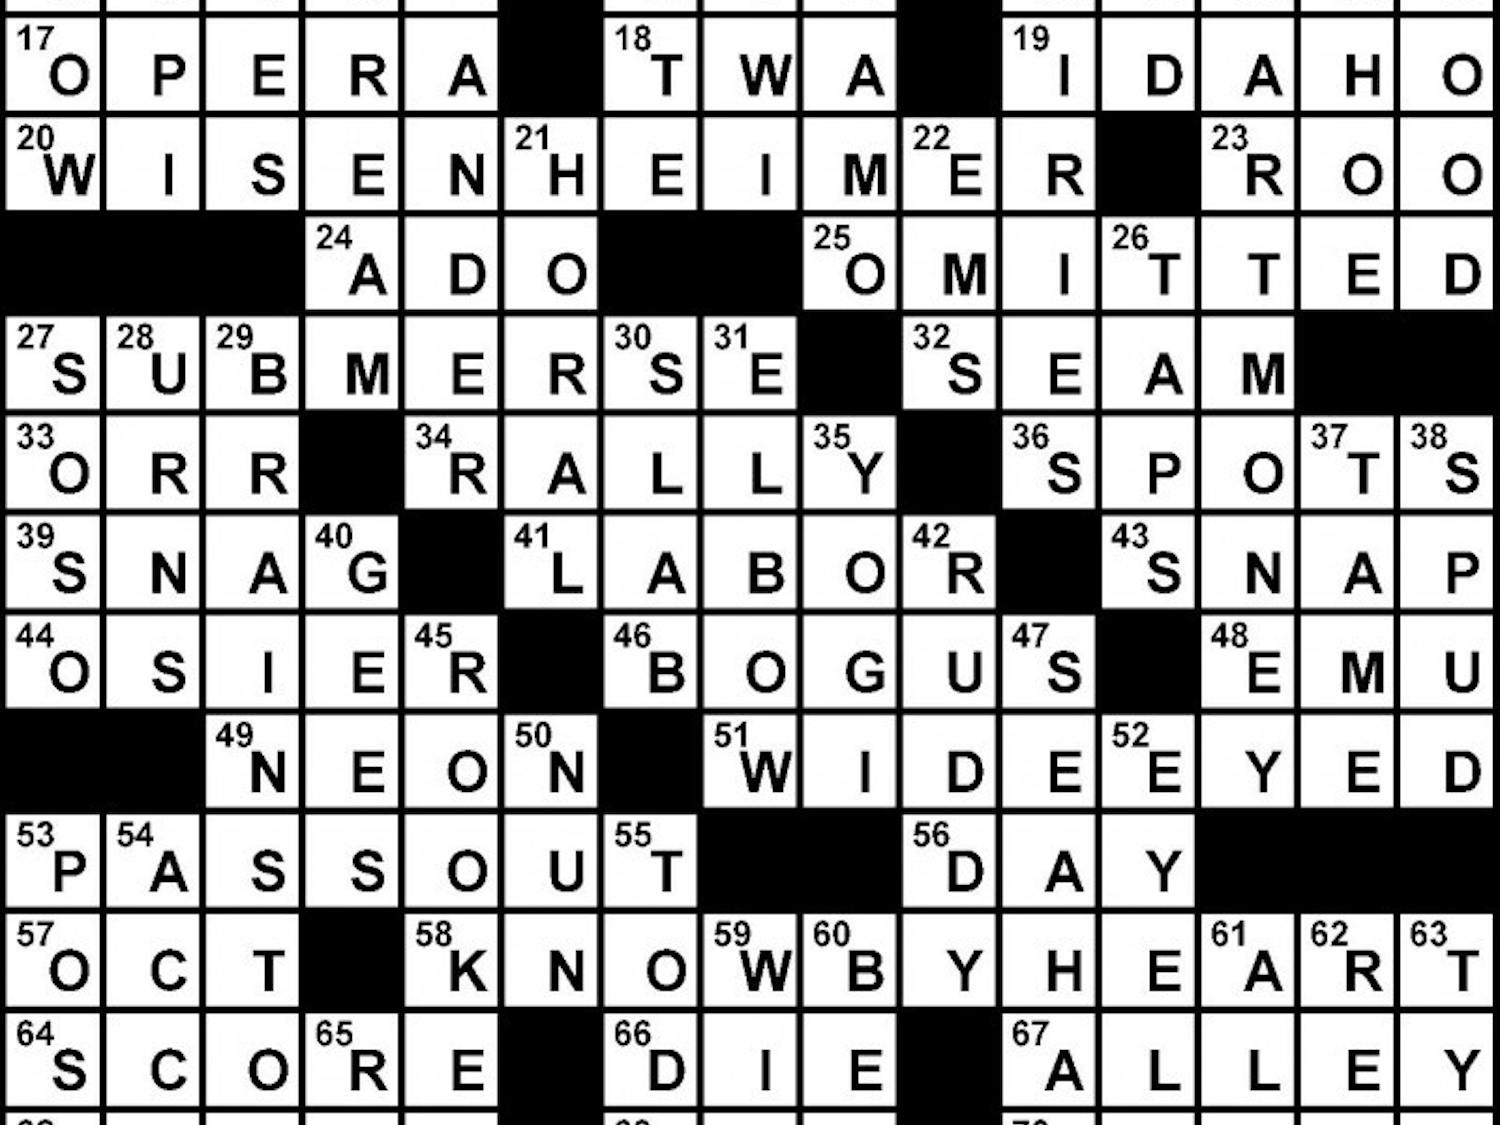 09/19/2011 - Crossword Solution